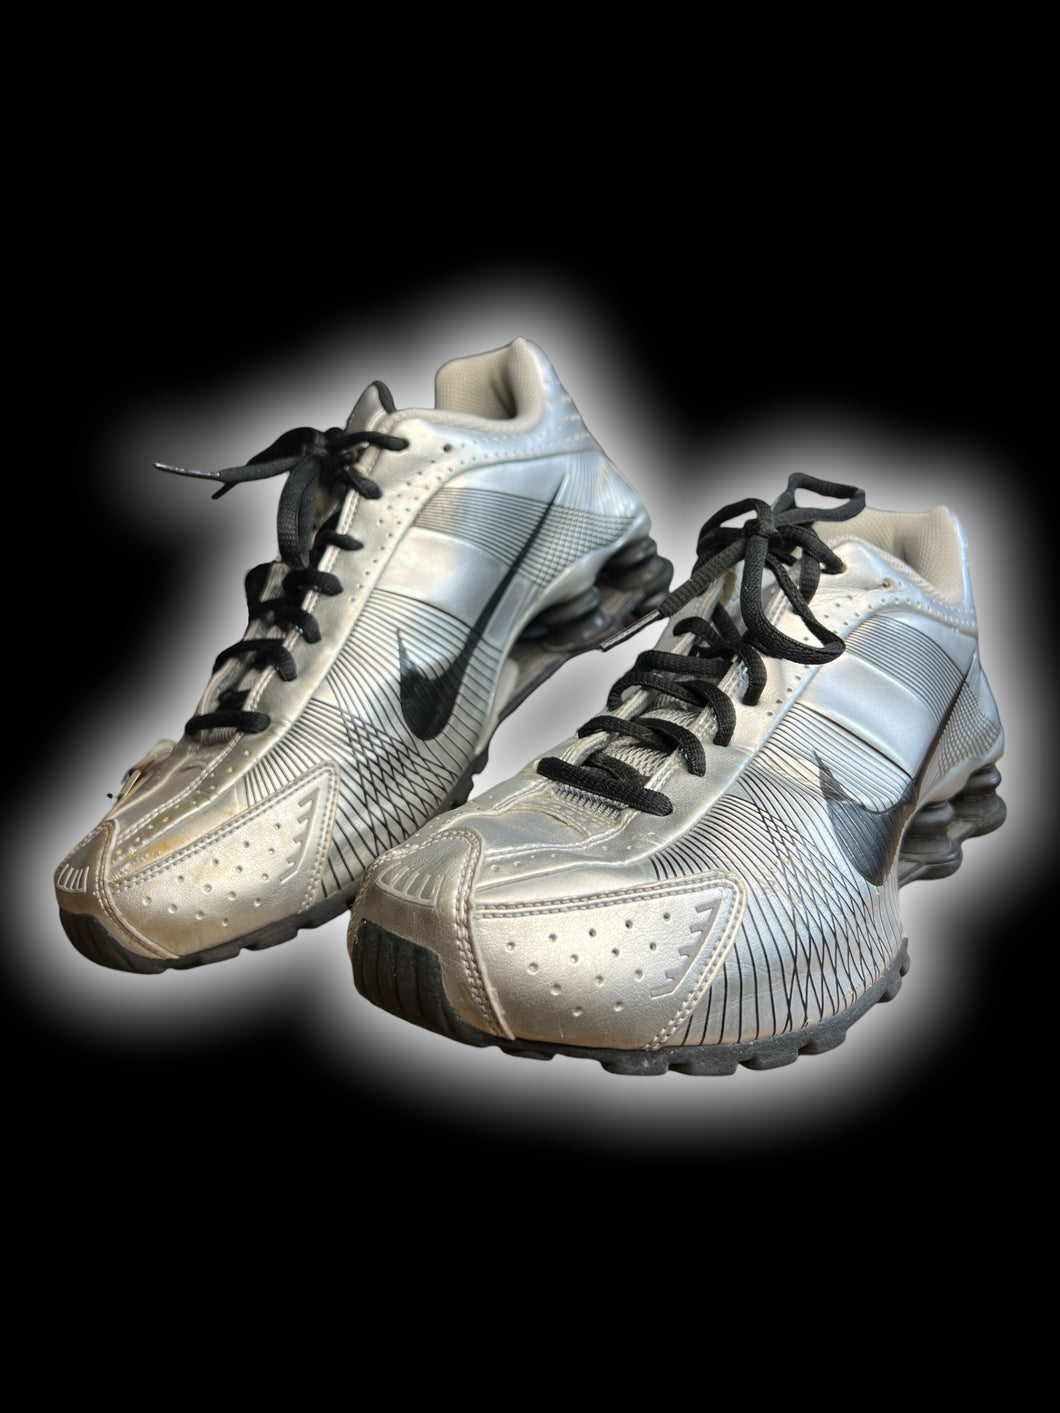 9 Silver Nike Shox sneakers w/ black geometric line pattern, black swoosh logo, black laces, shock absorber soles, & air hole perferations